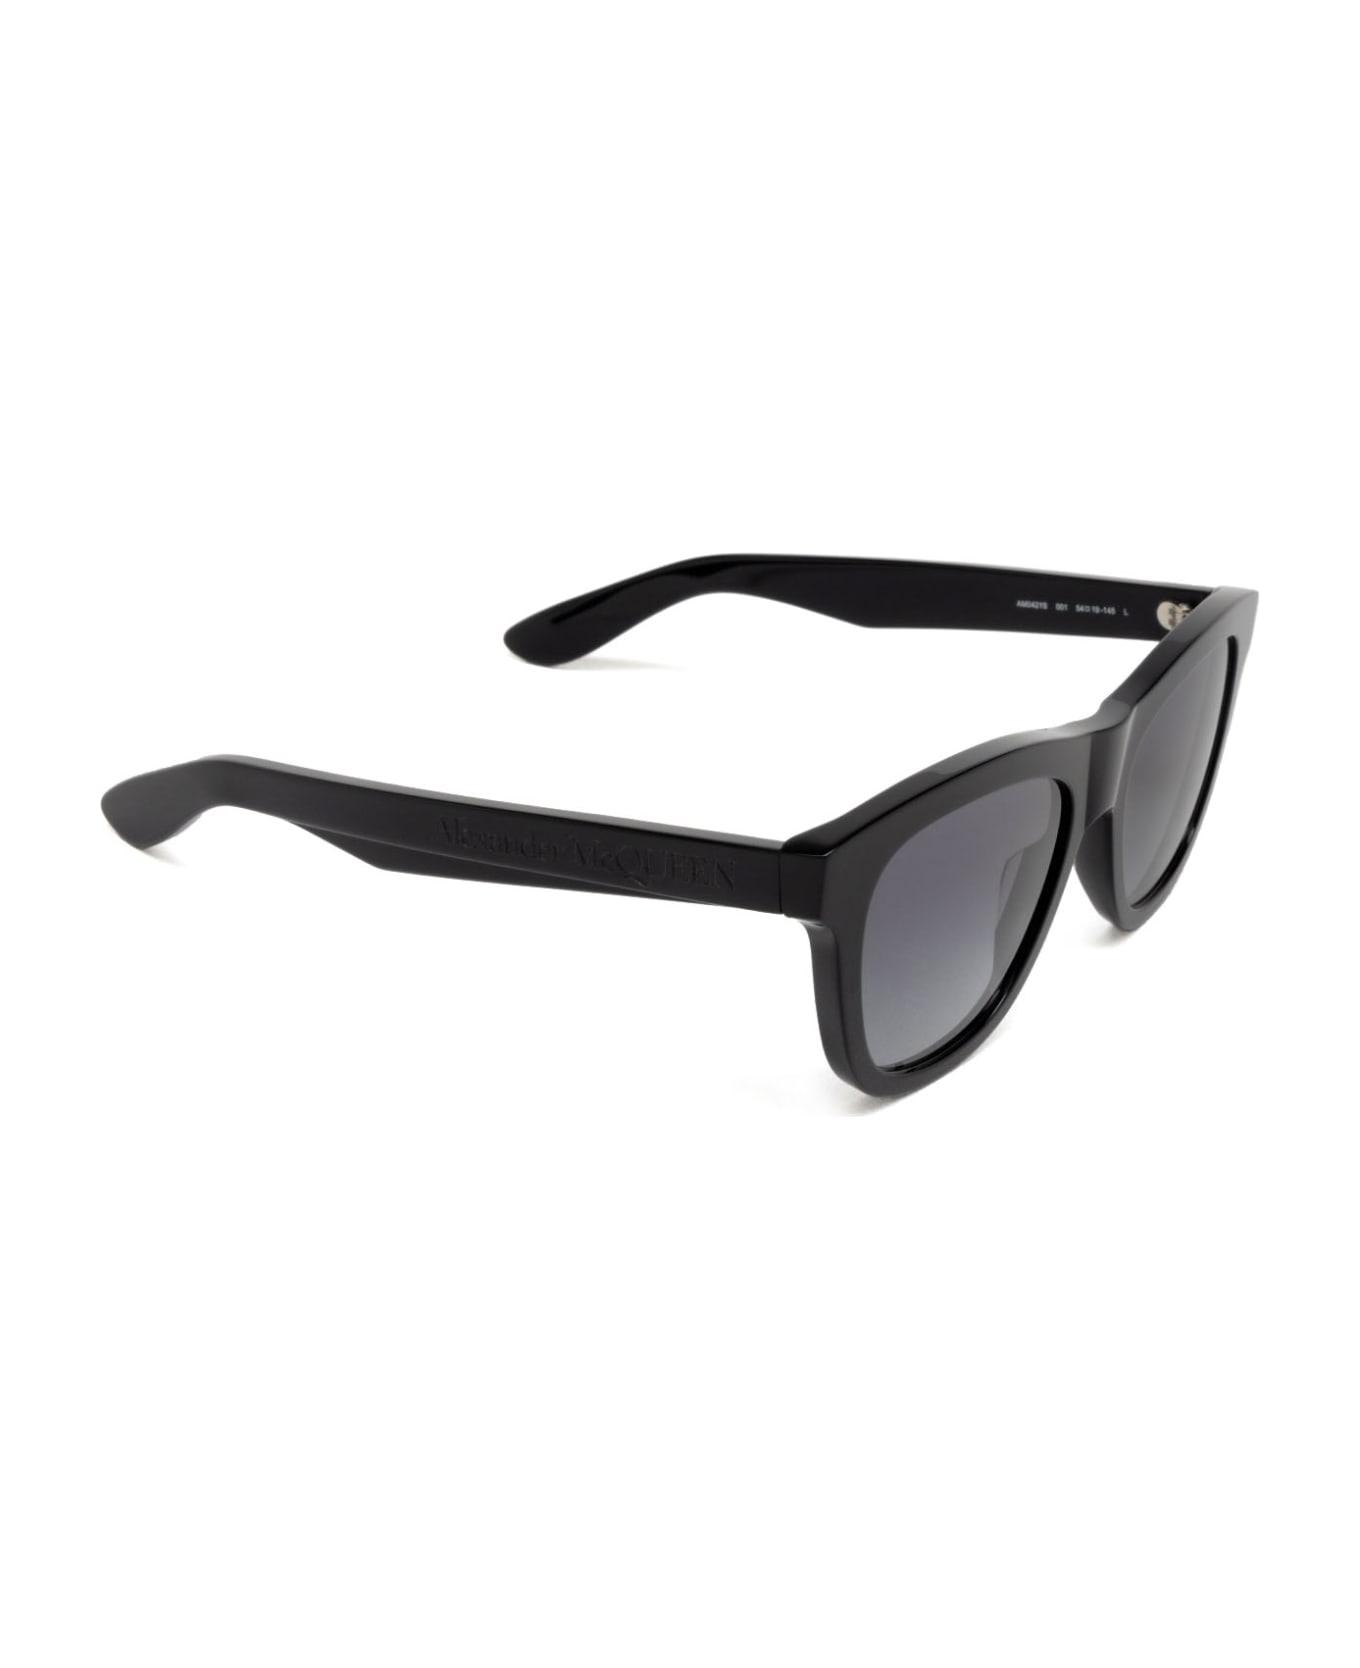 Alexander McQueen Eyewear Am0421s Black Sunglasses - Black